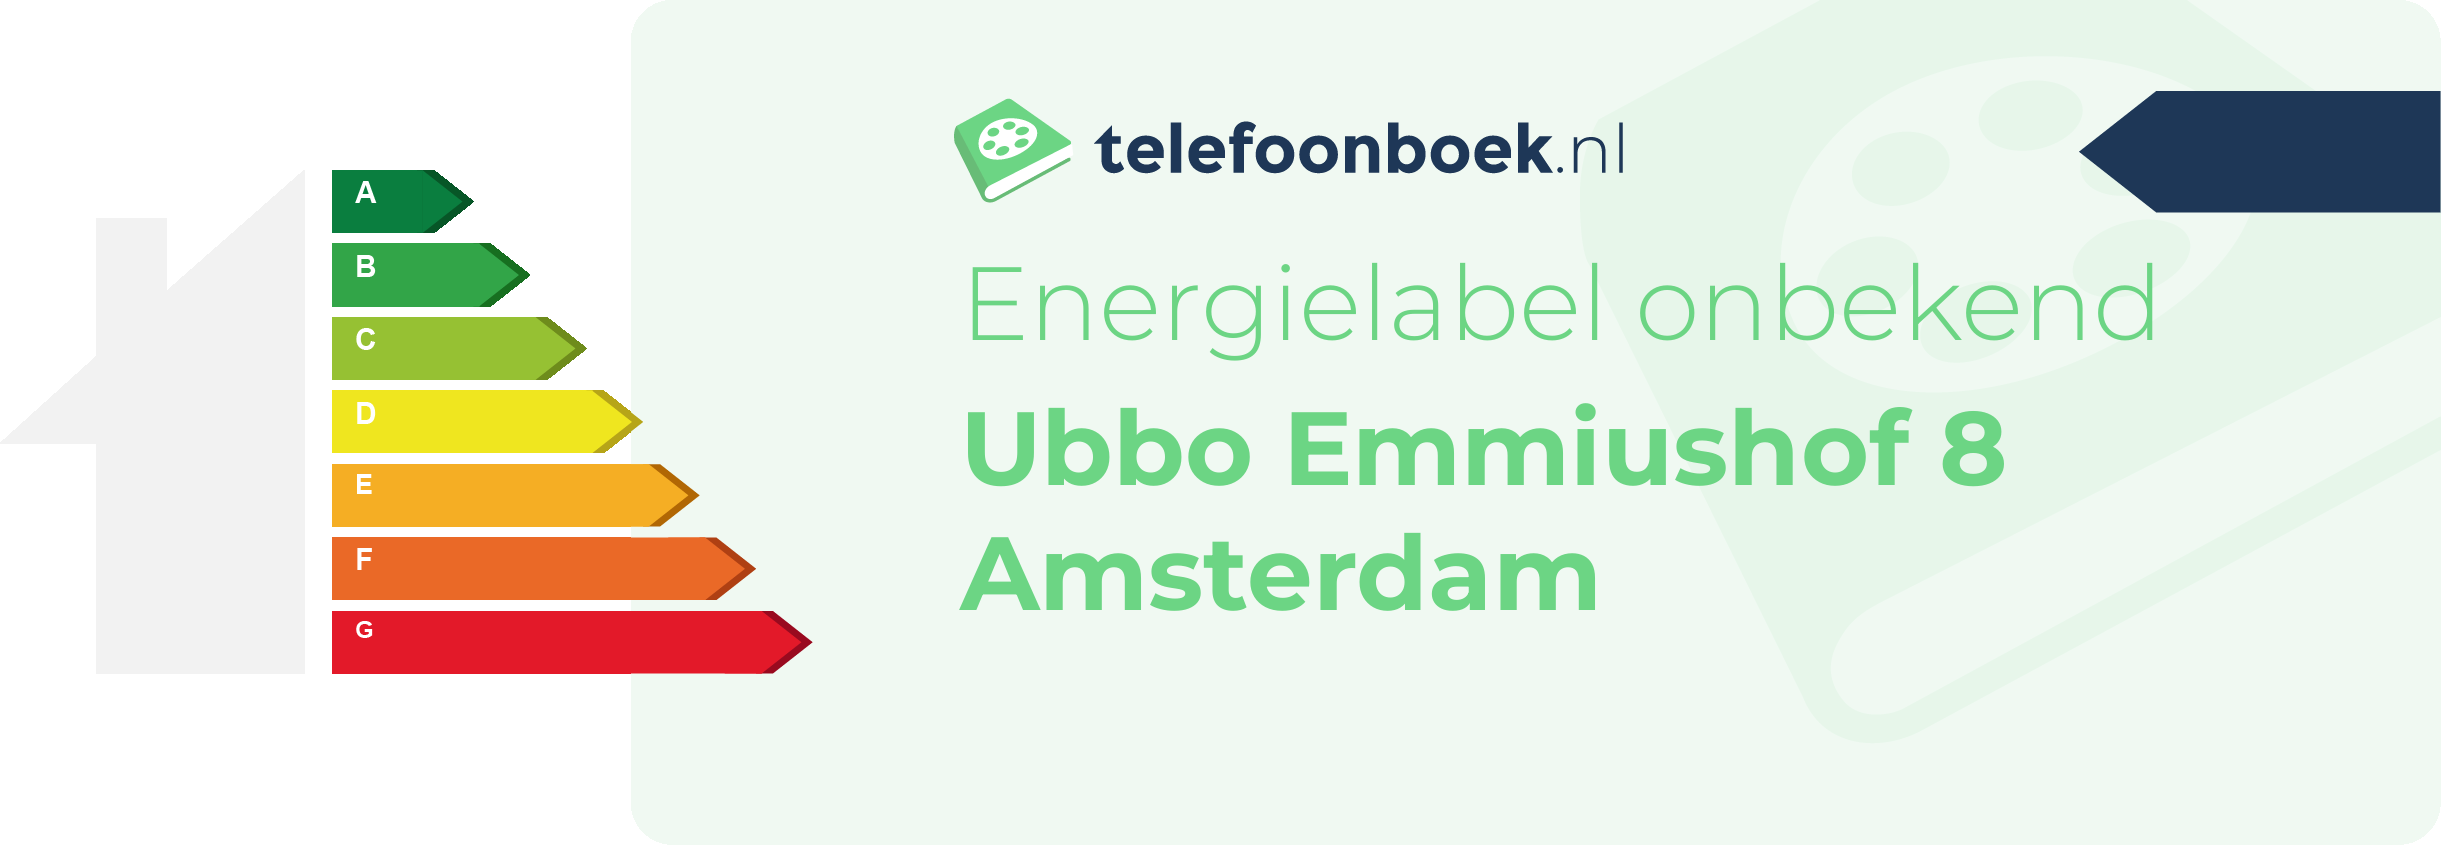 Energielabel Ubbo Emmiushof 8 Amsterdam